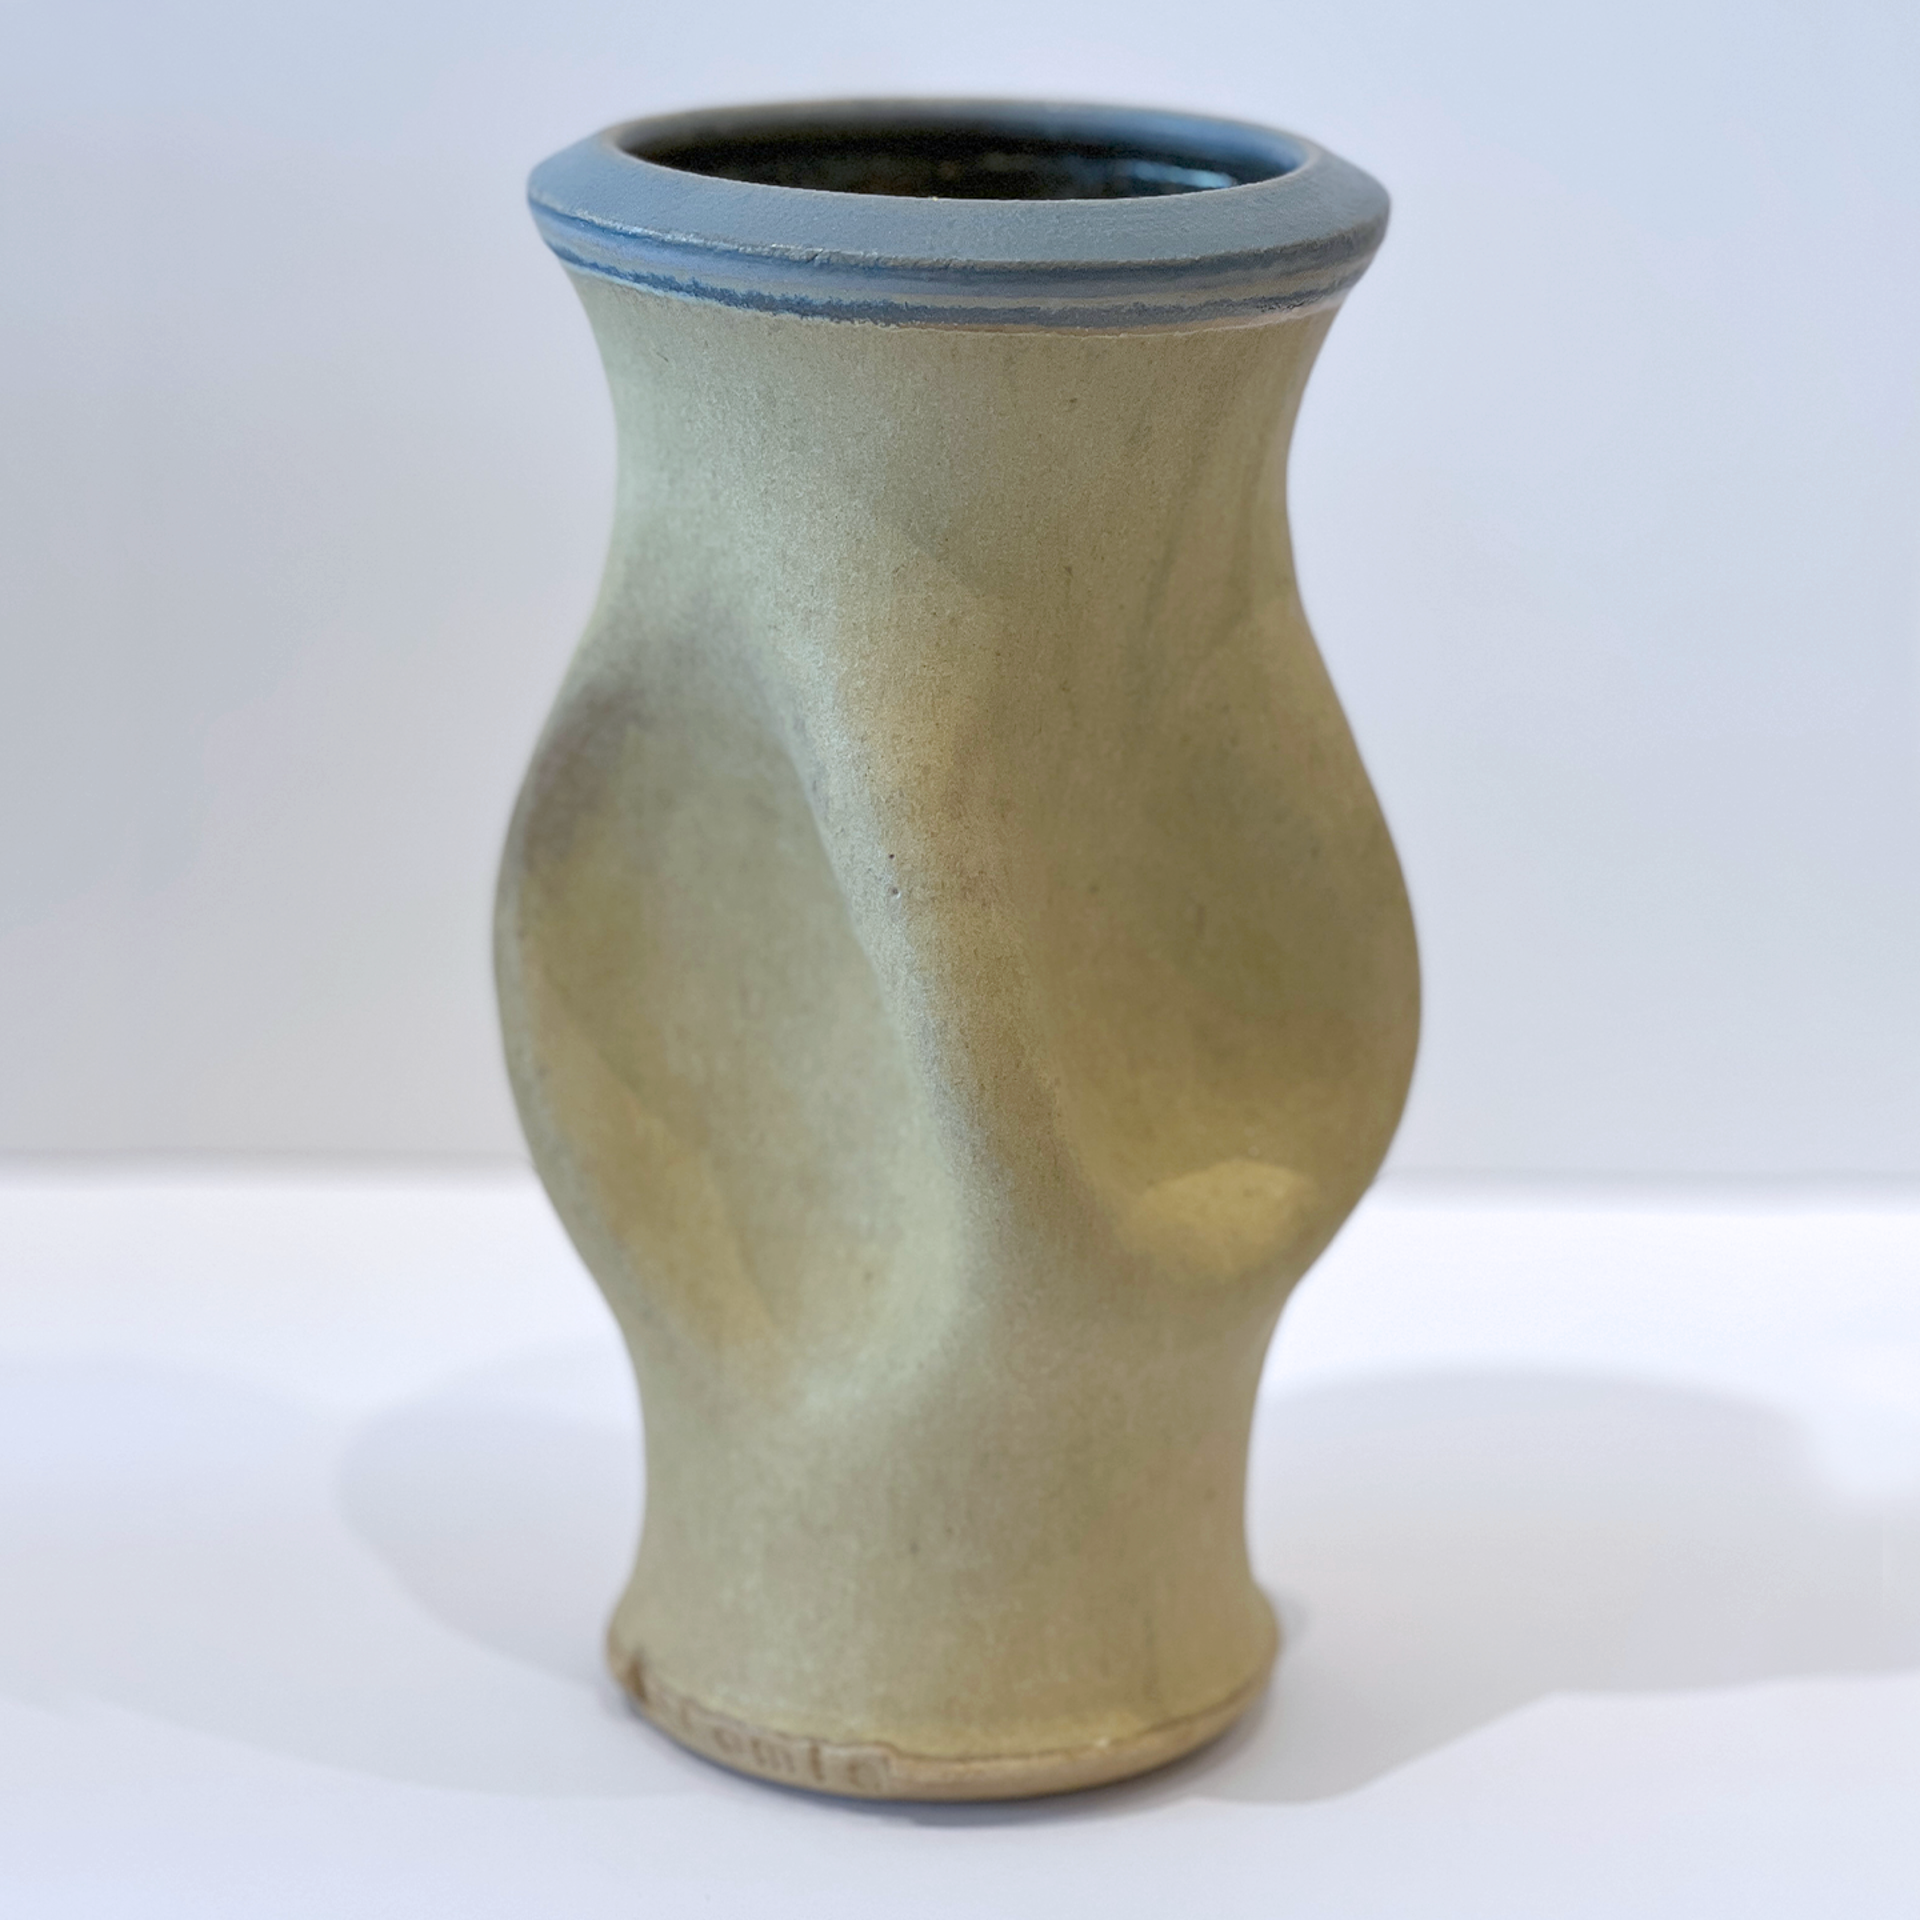 Vase 19 by David LaLomia